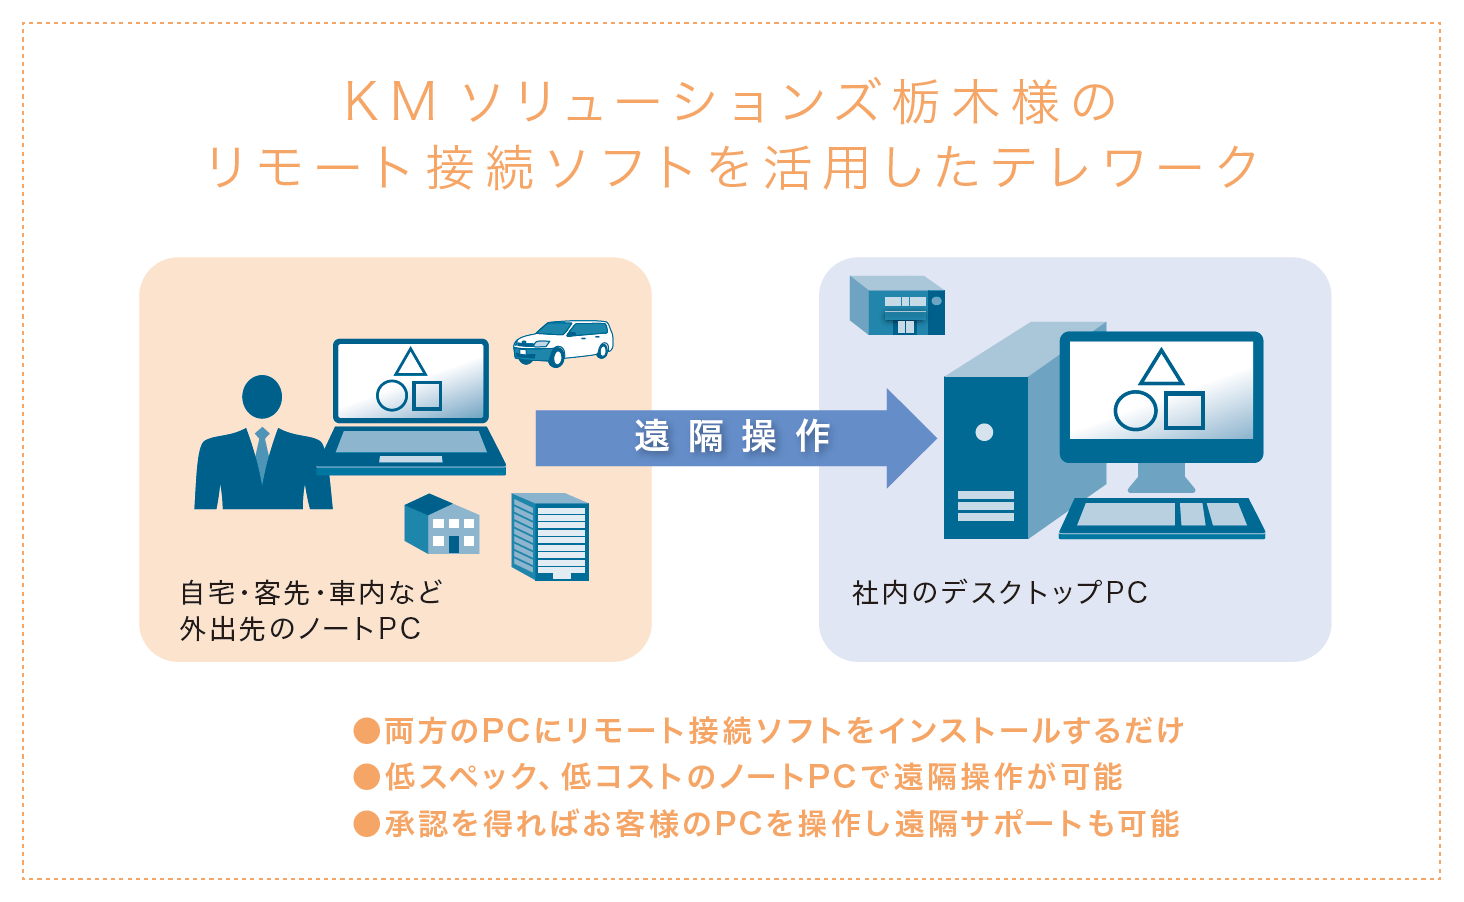 KMソリューションズ栃木様のリモート接続ソフトを活用したテレワーク